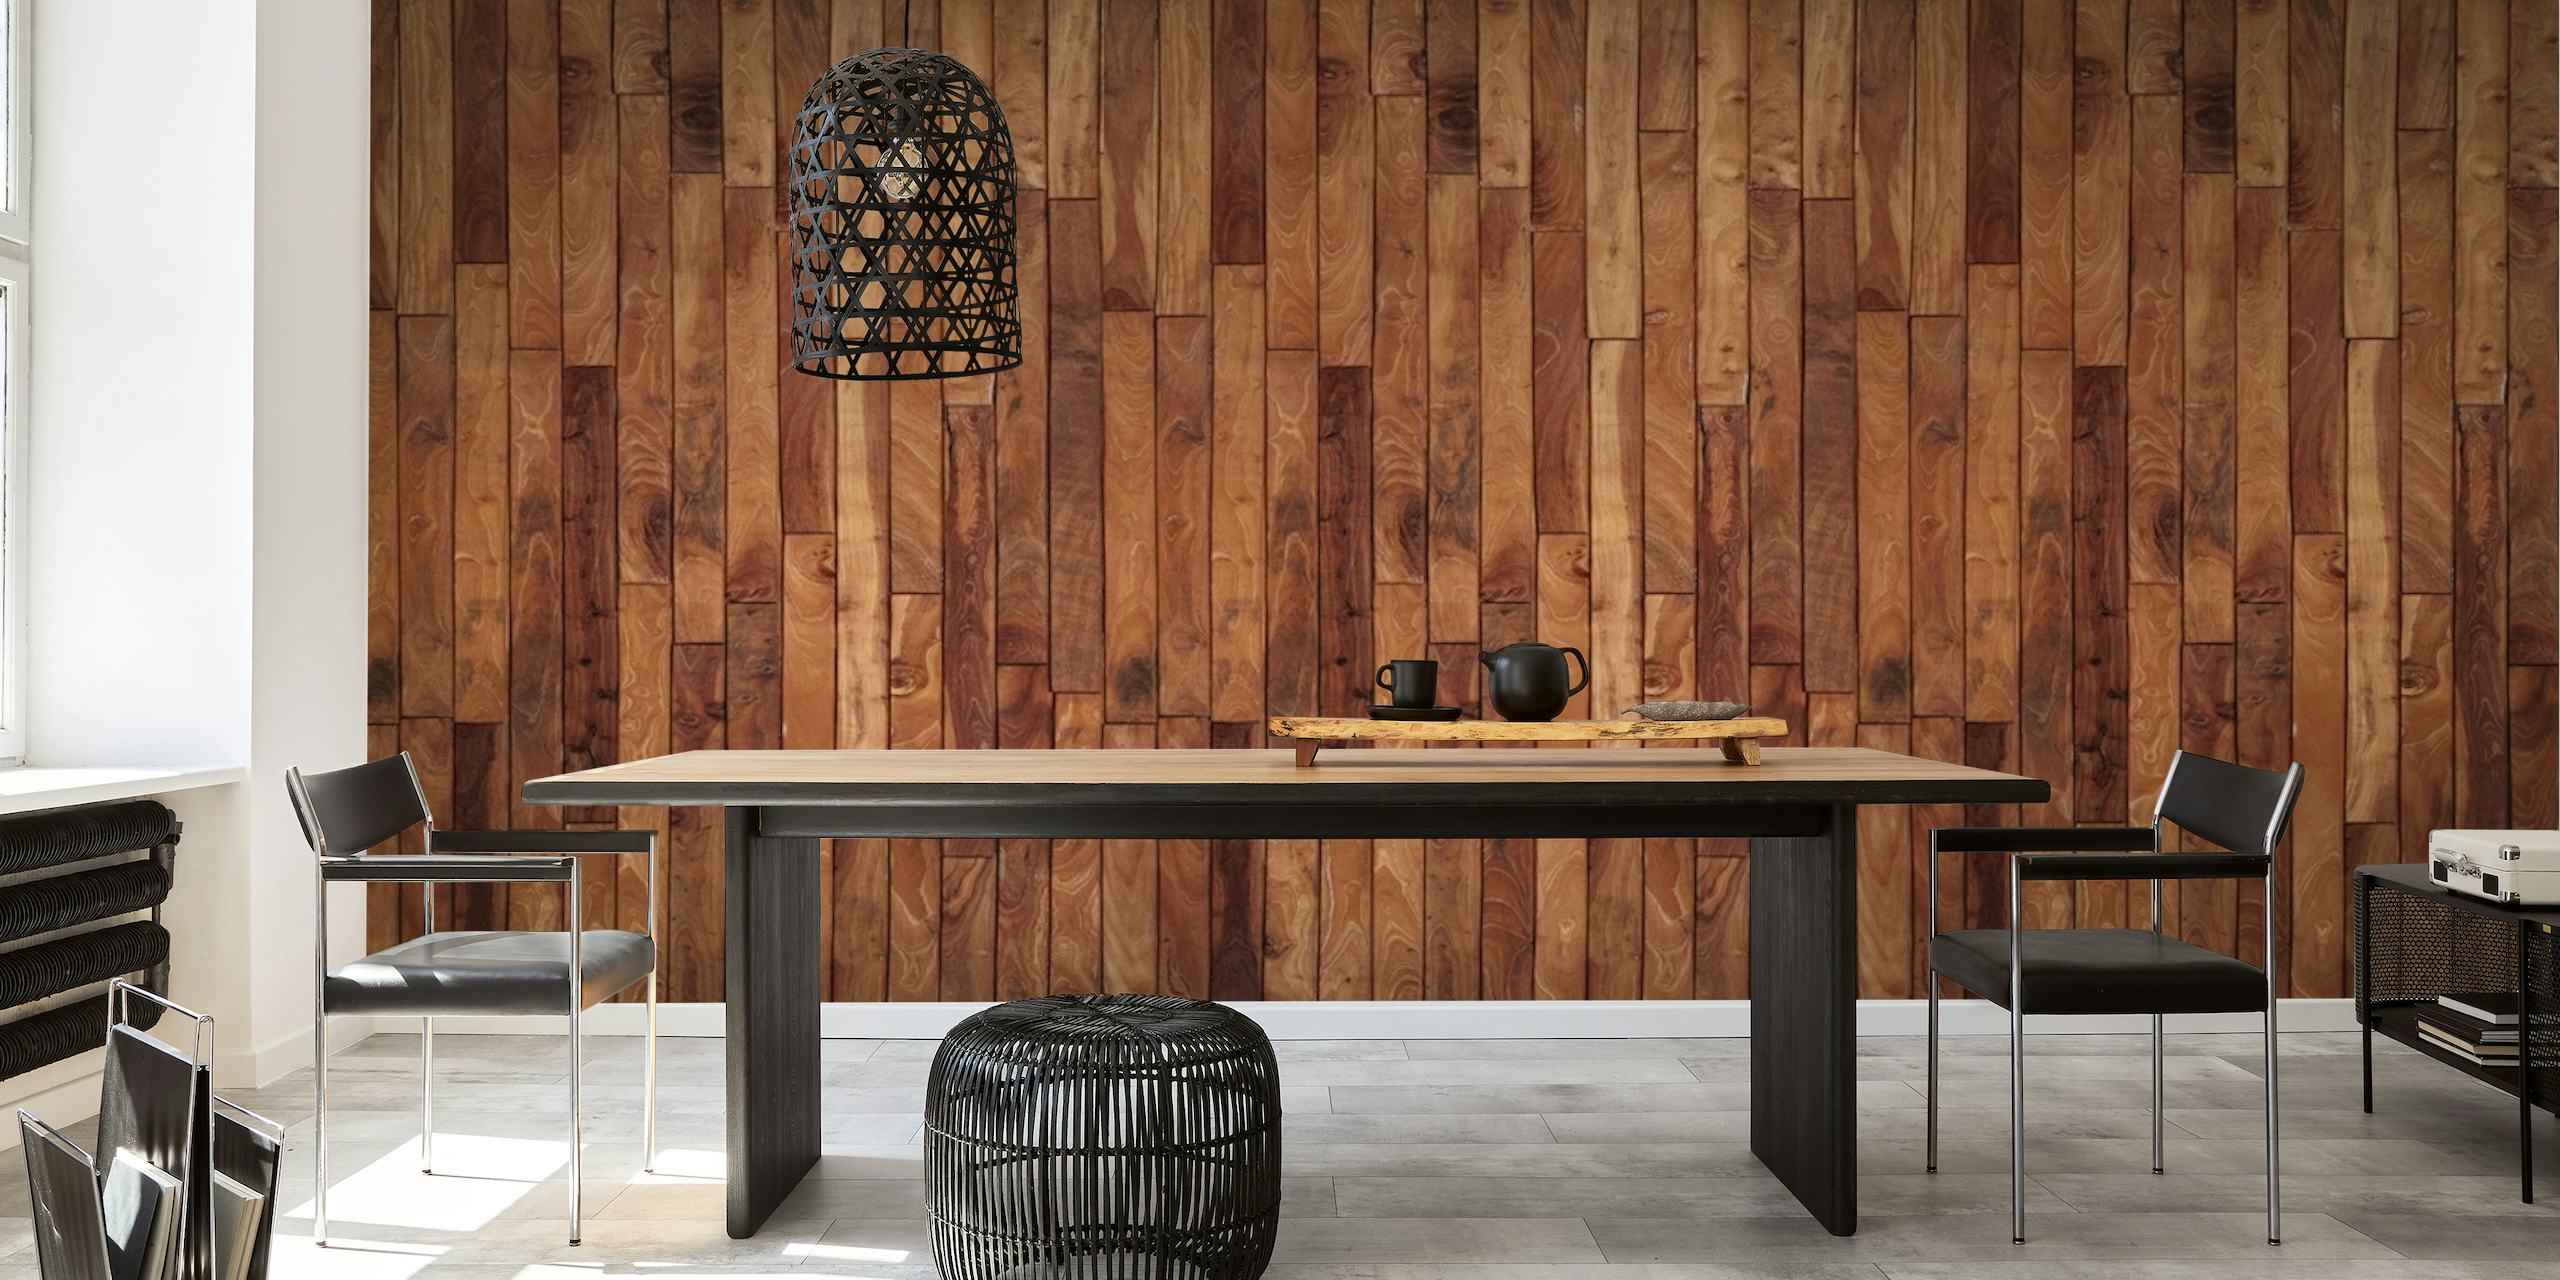 Wooden wall panel behang